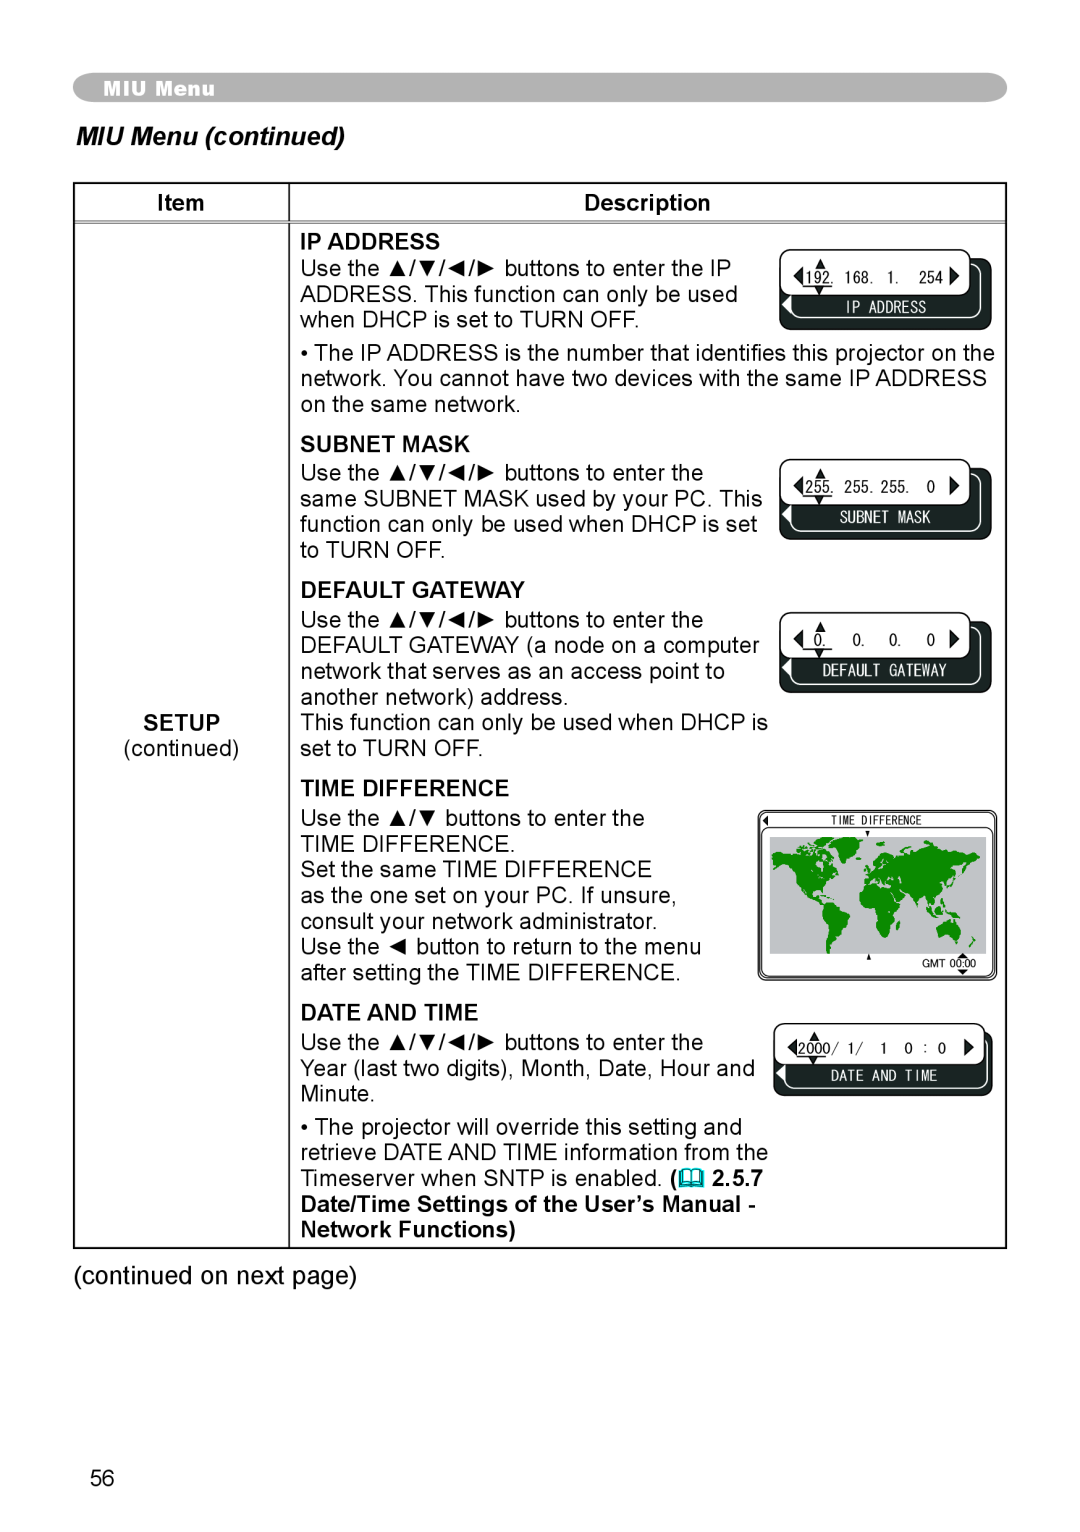 Hitachi CP-X608 MIU Menu continued, Description, Ip Address, Subnet Mask, Default Gateway, Setup, Time Difference 